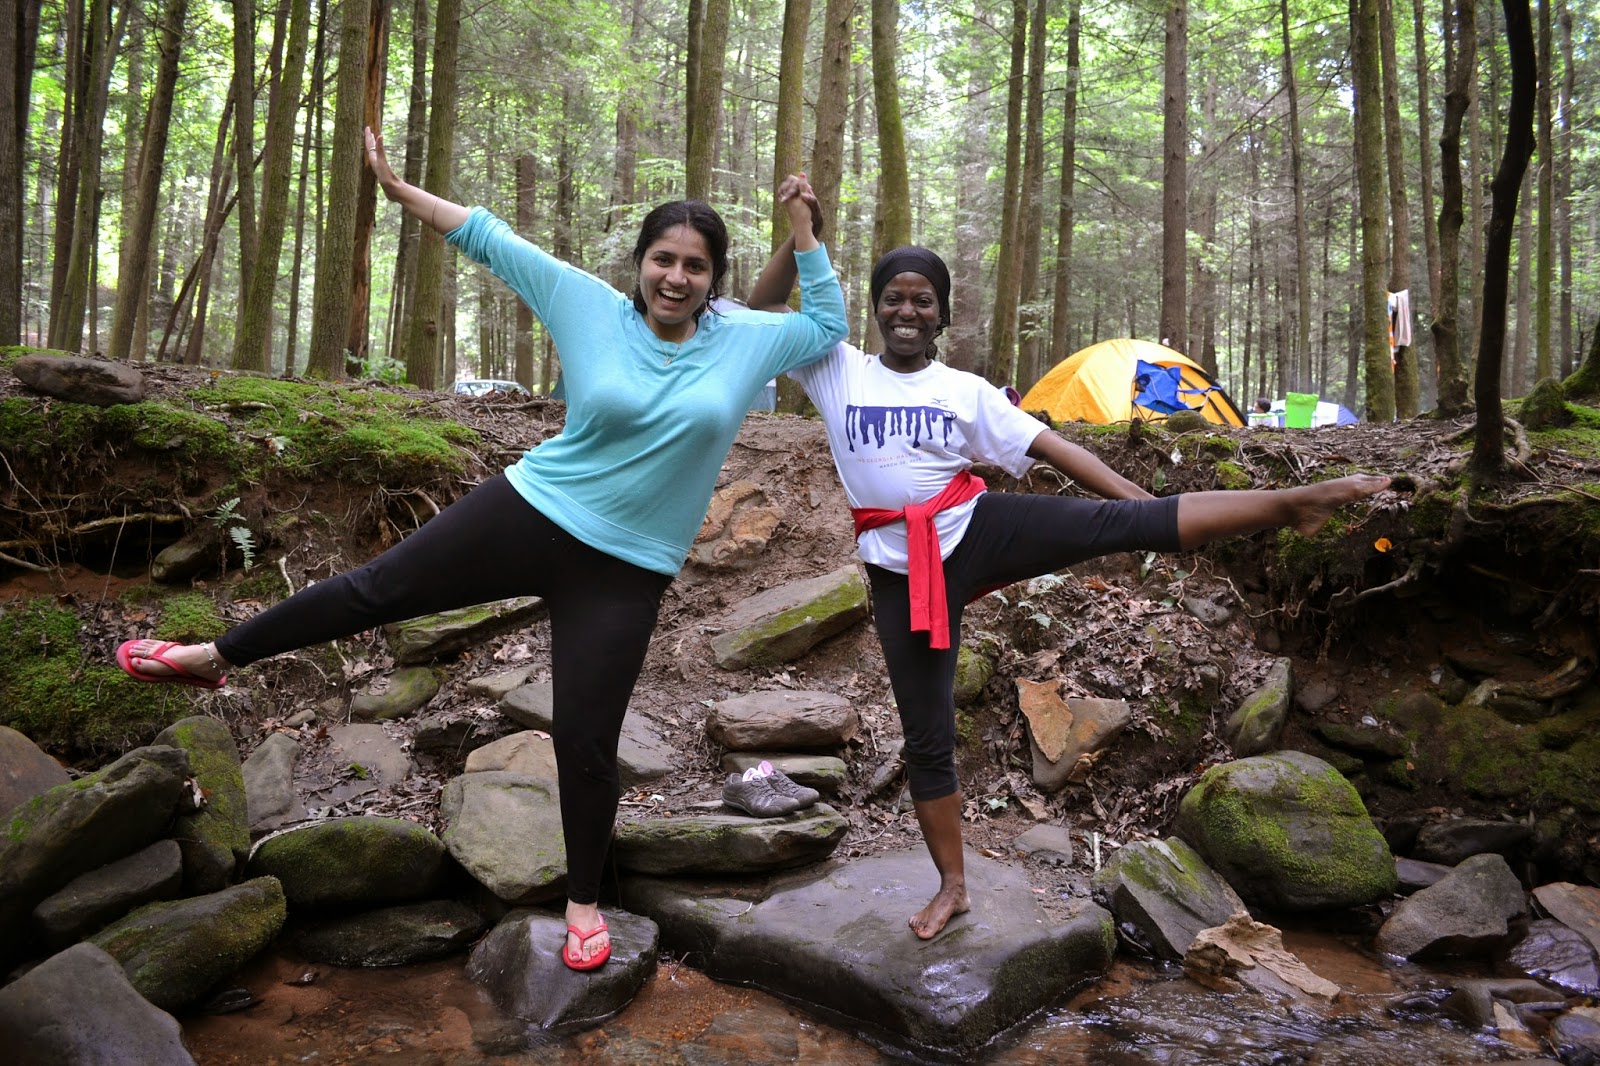 Divya Sarin and Friend on a Yogi camping trip